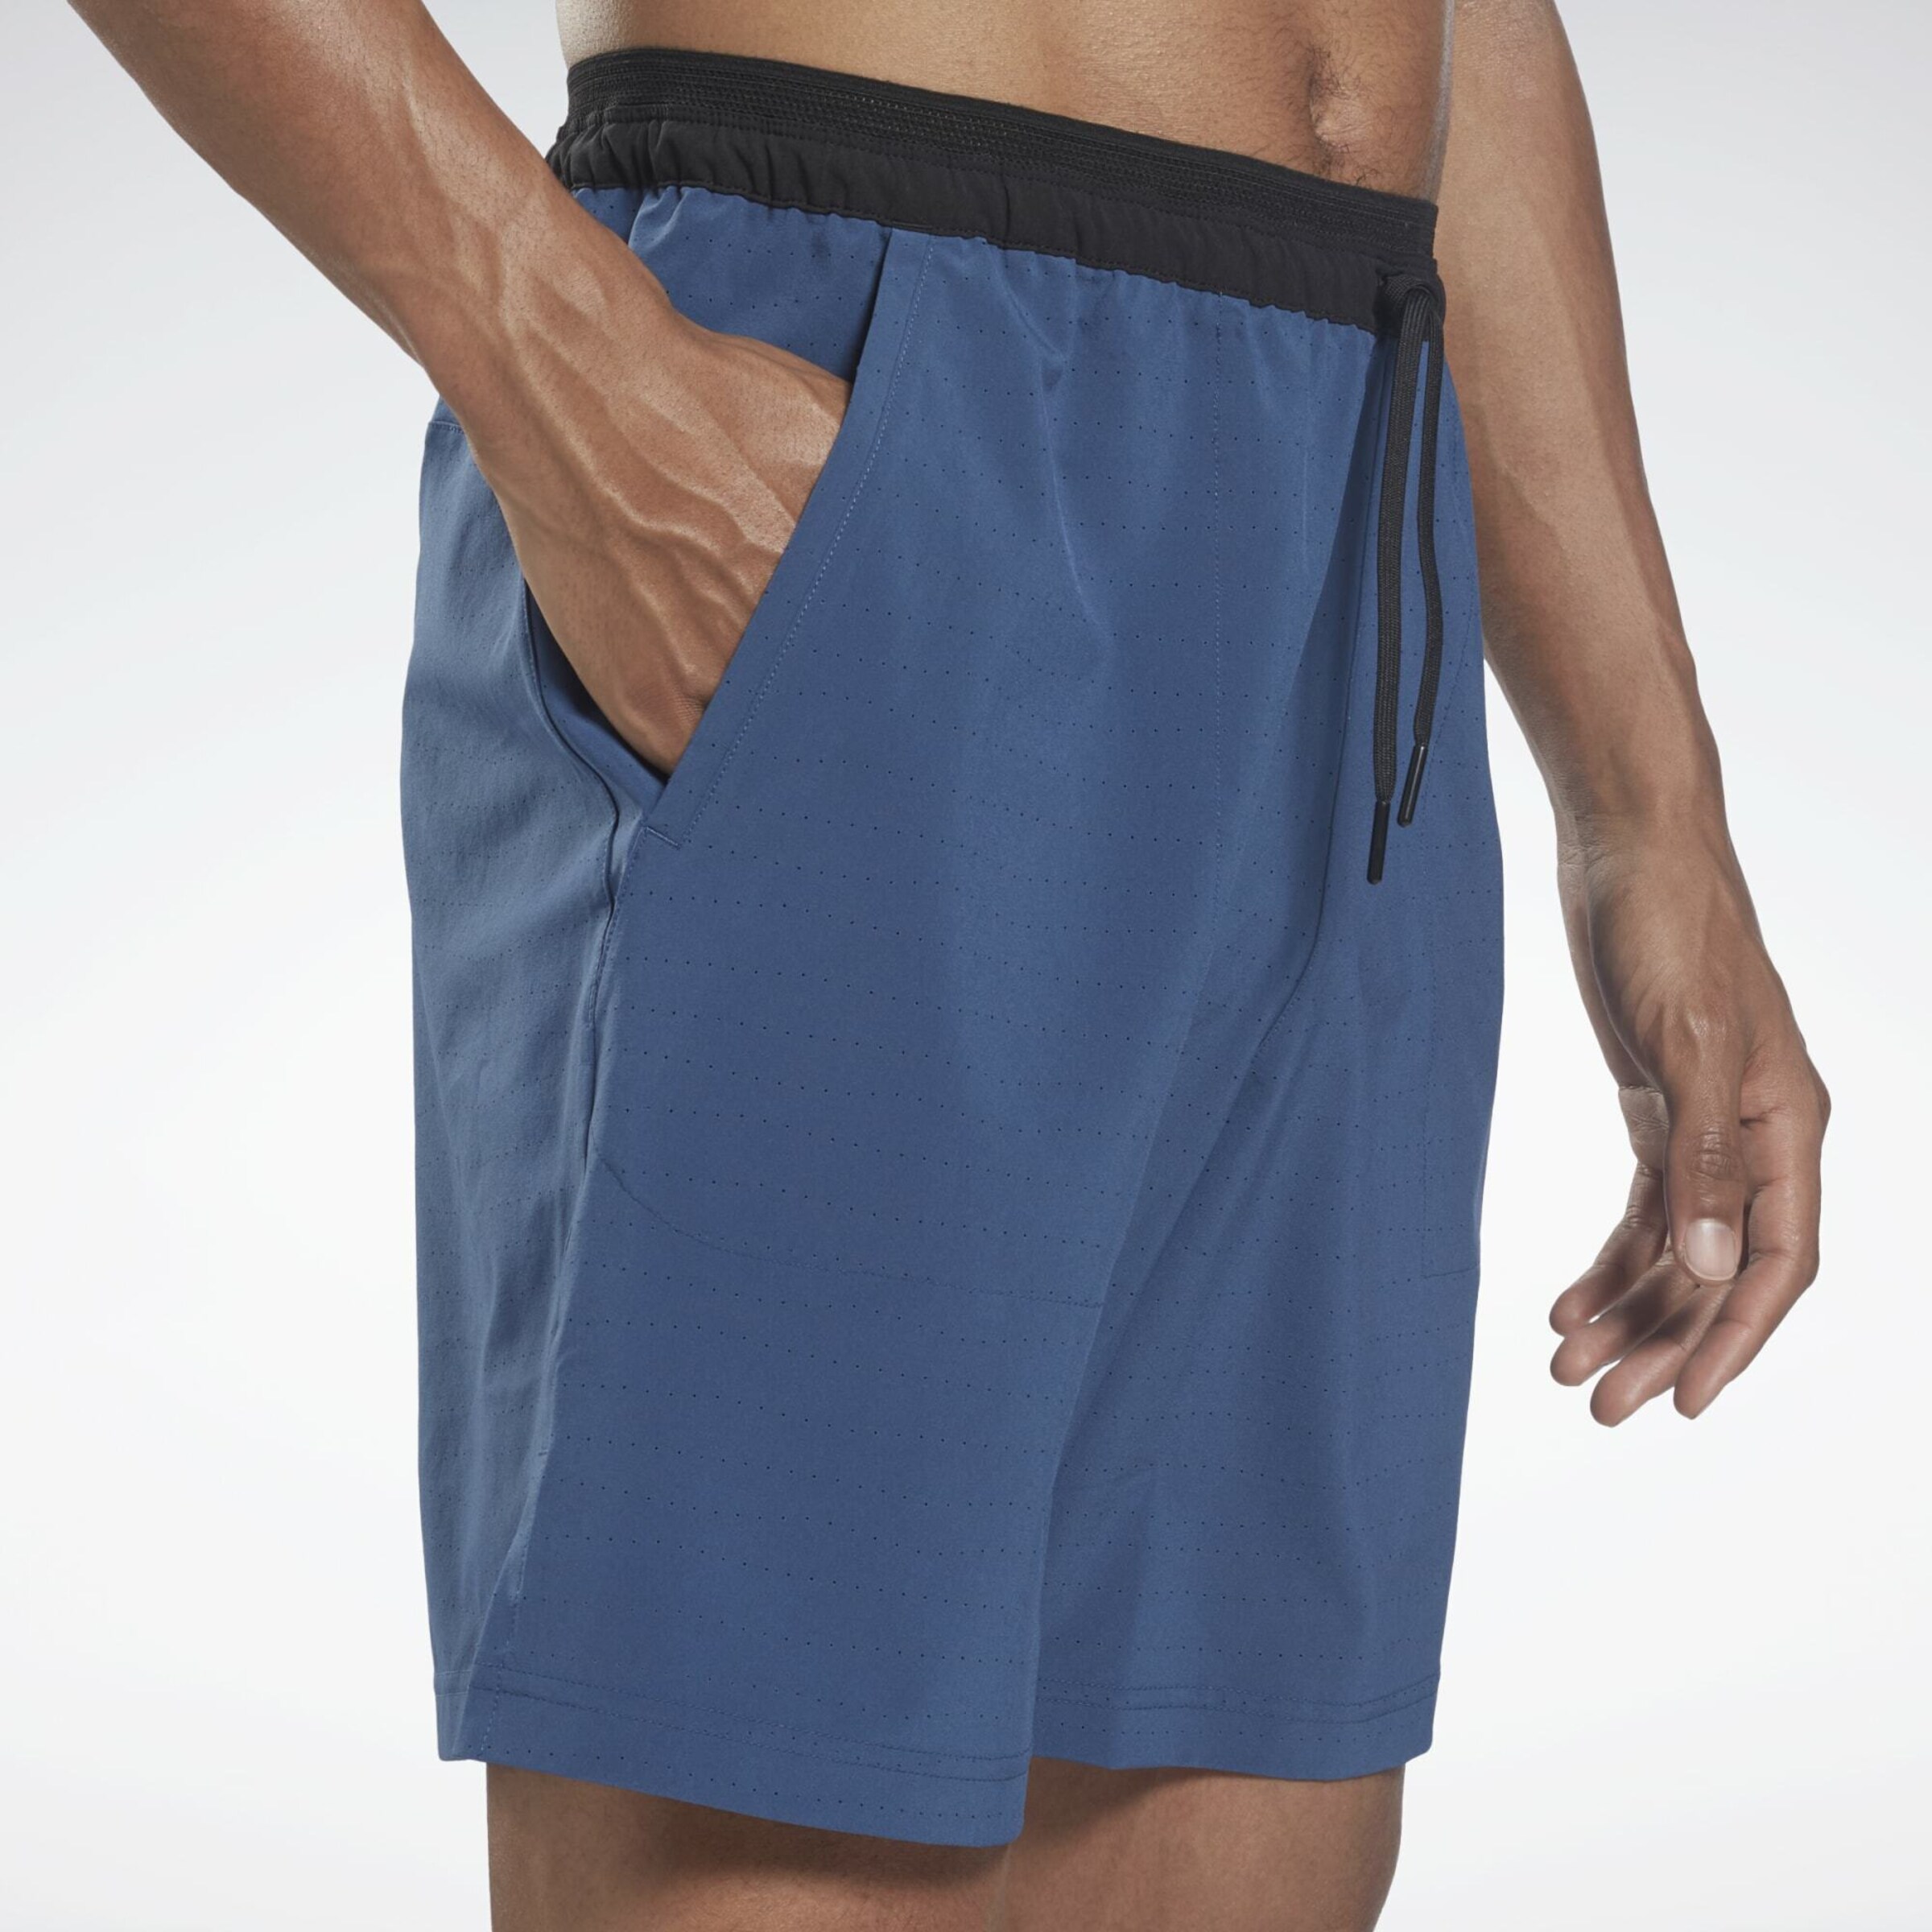 Männer Sportarten Reebok Sport Shorts in Blau - BH99555